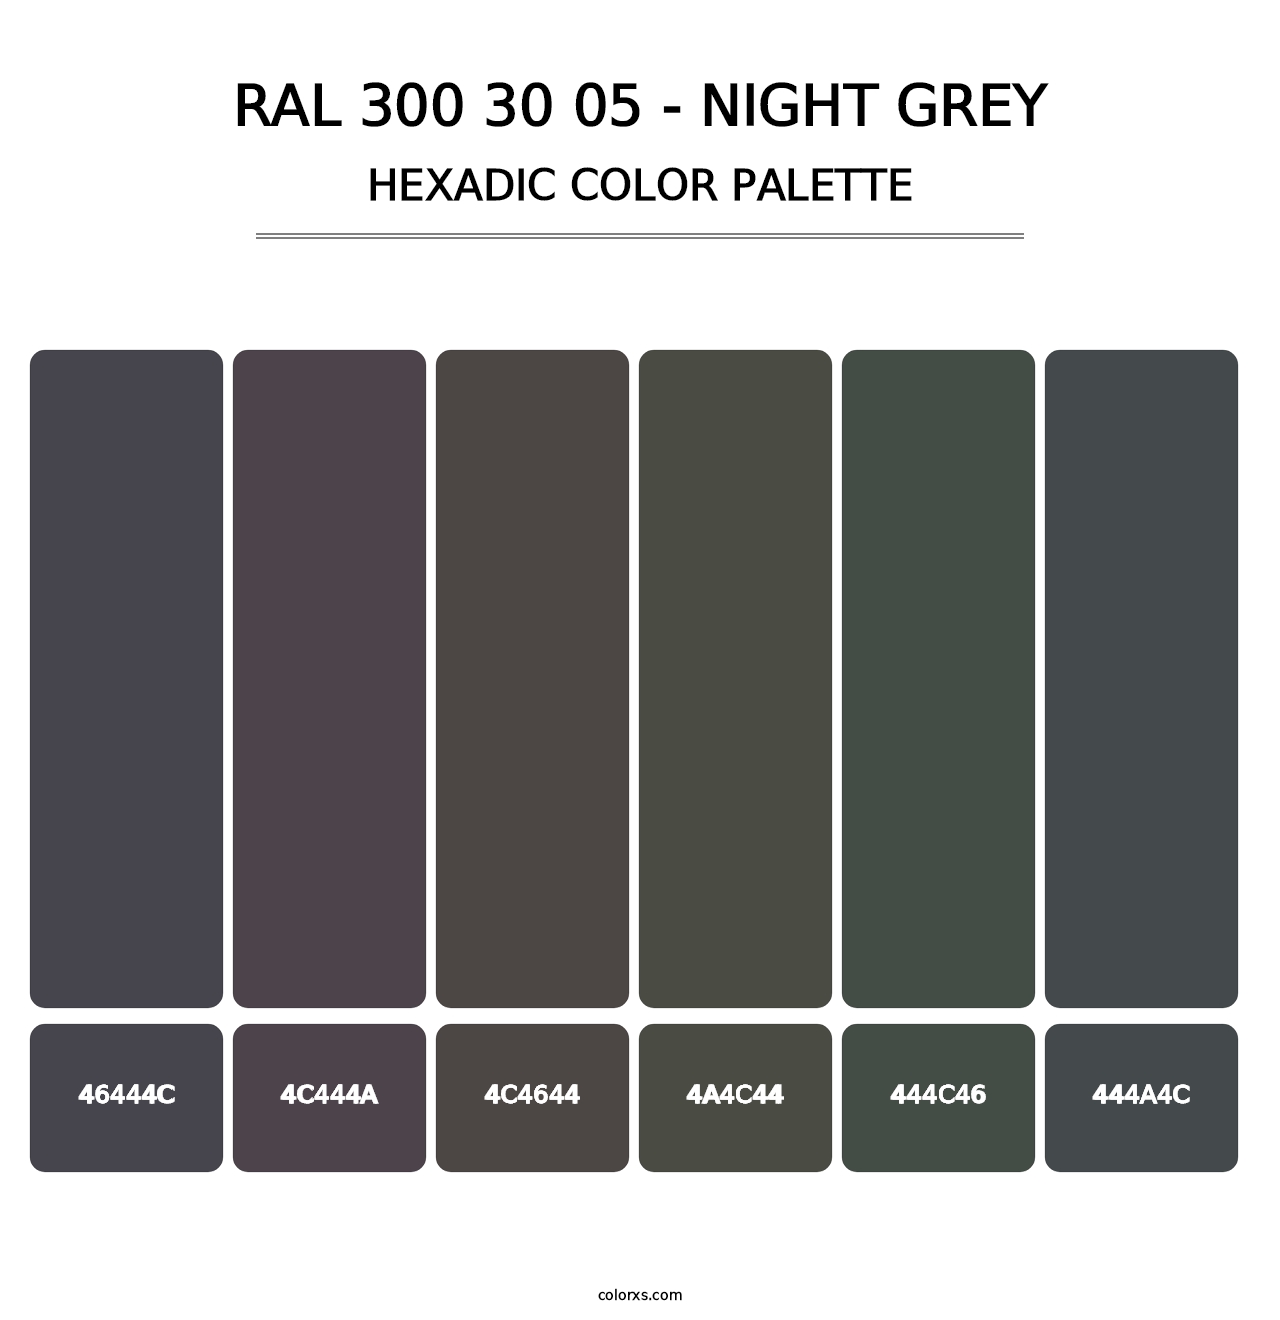 RAL 300 30 05 - Night Grey - Hexadic Color Palette